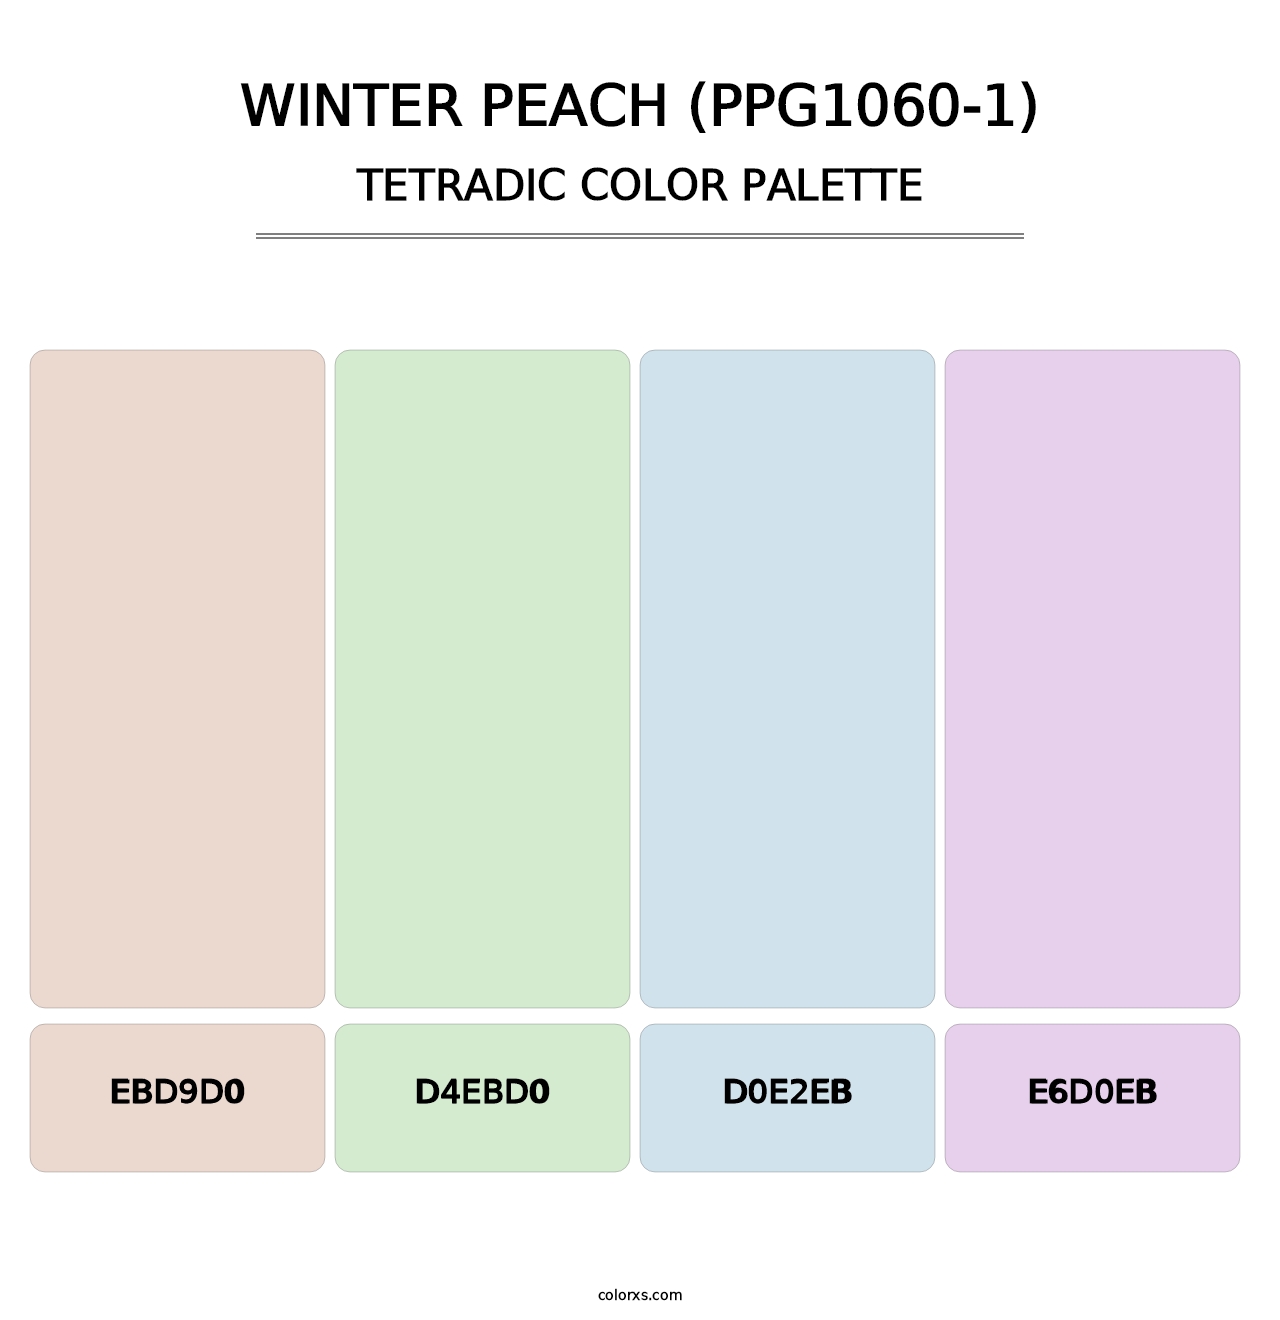 Winter Peach (PPG1060-1) - Tetradic Color Palette